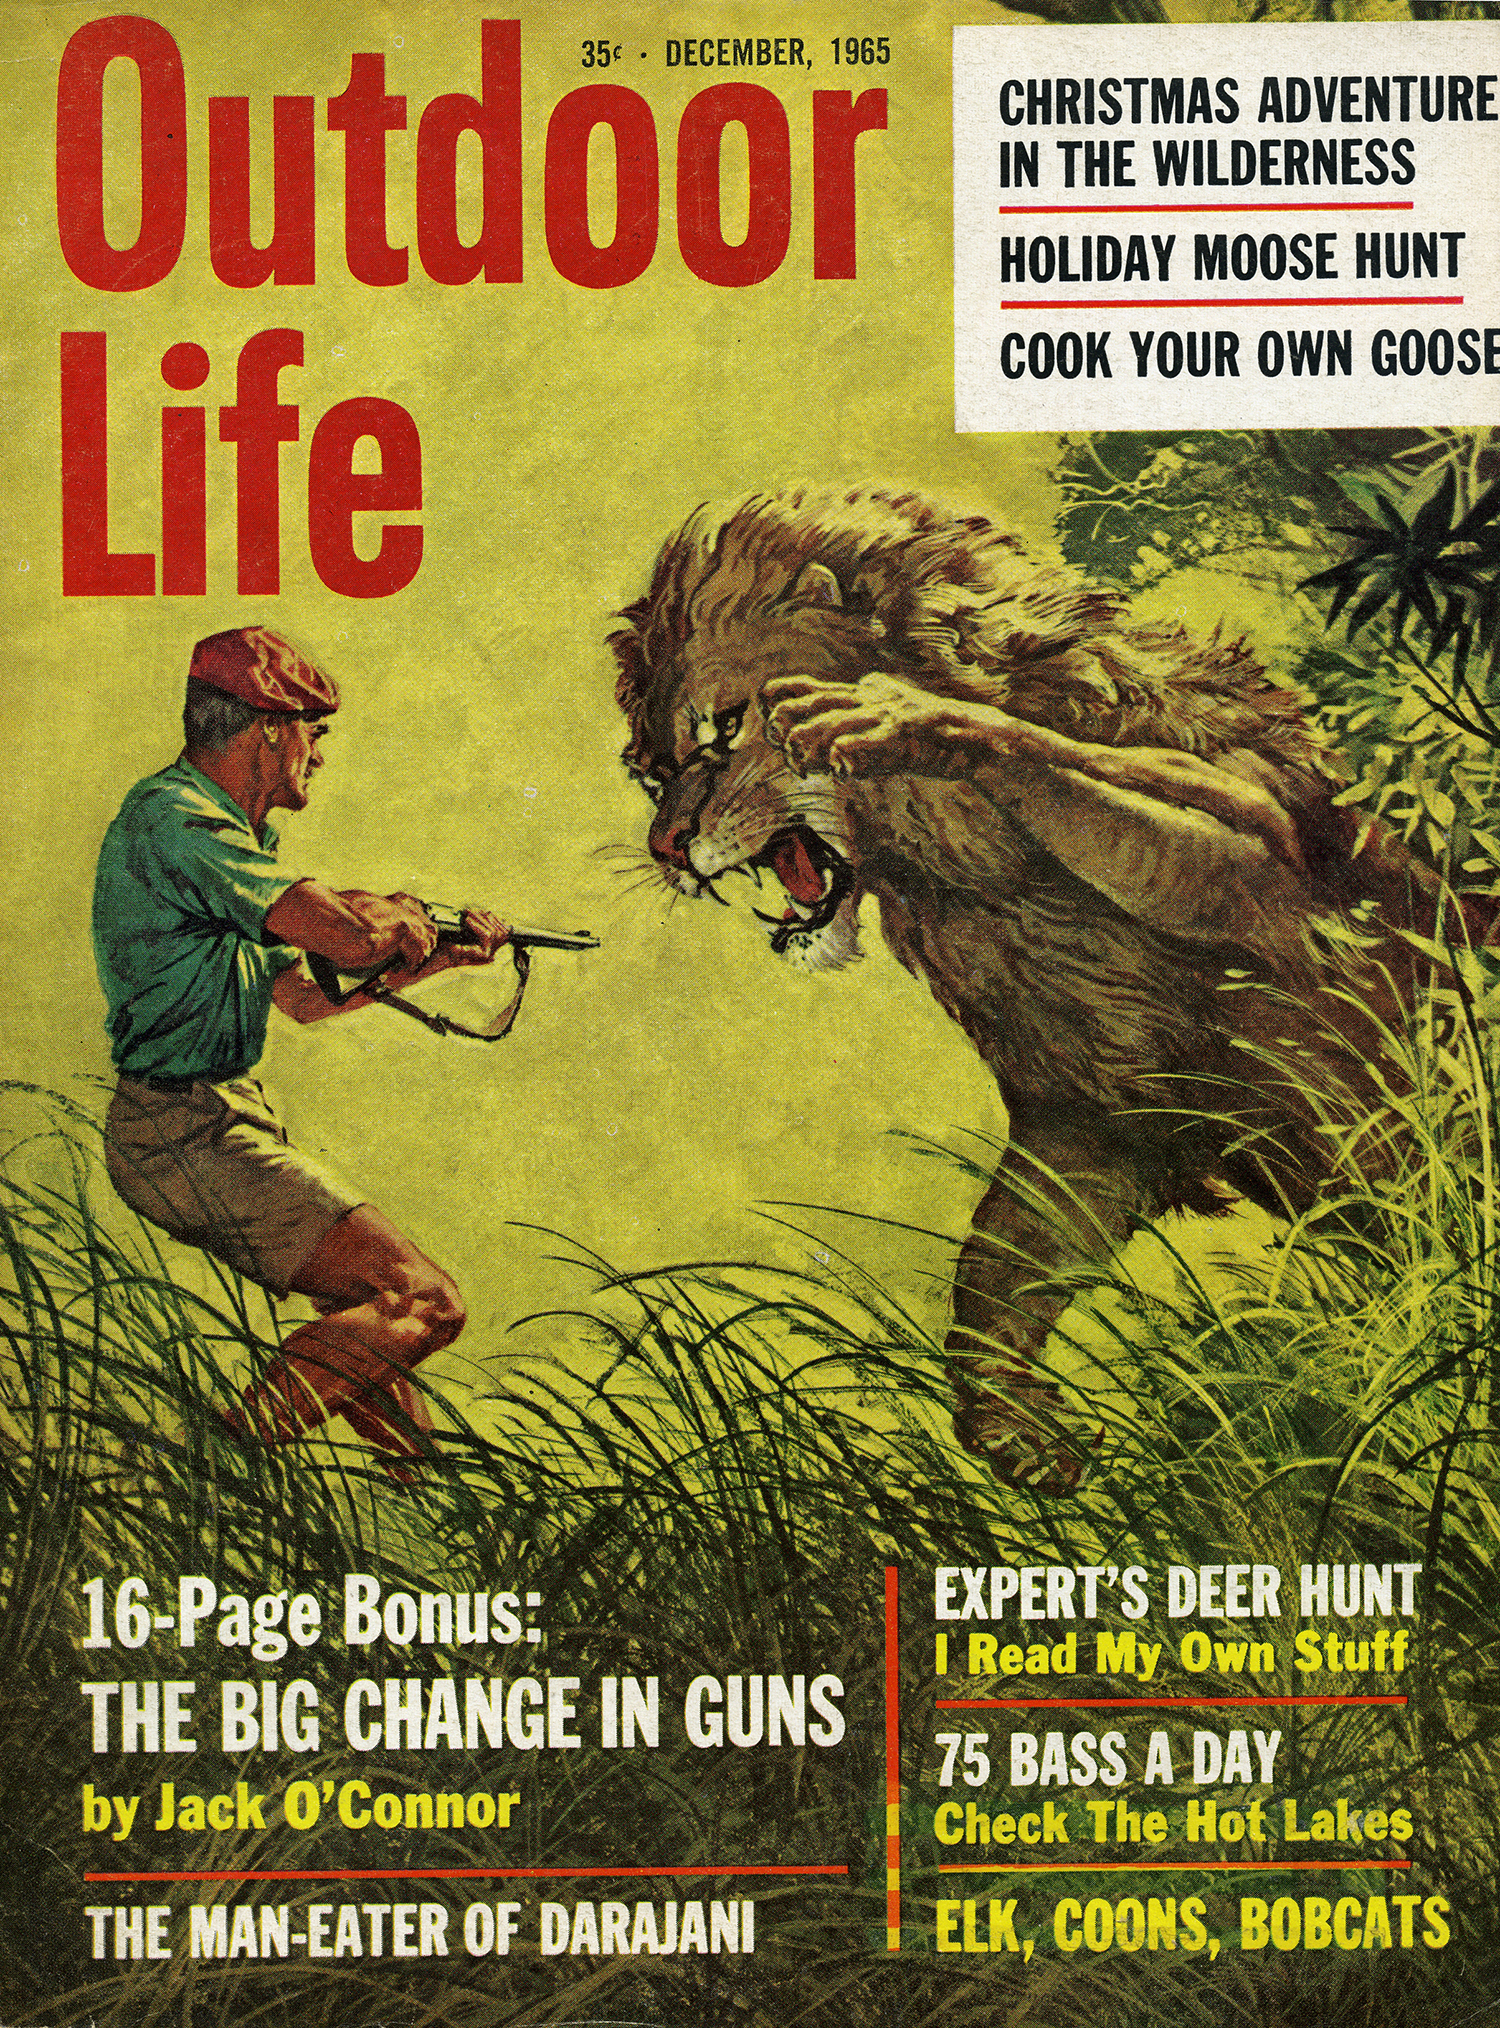 December 1965: Charging predator covers—bears, bucks, lions—were big hits in the ’60s. 